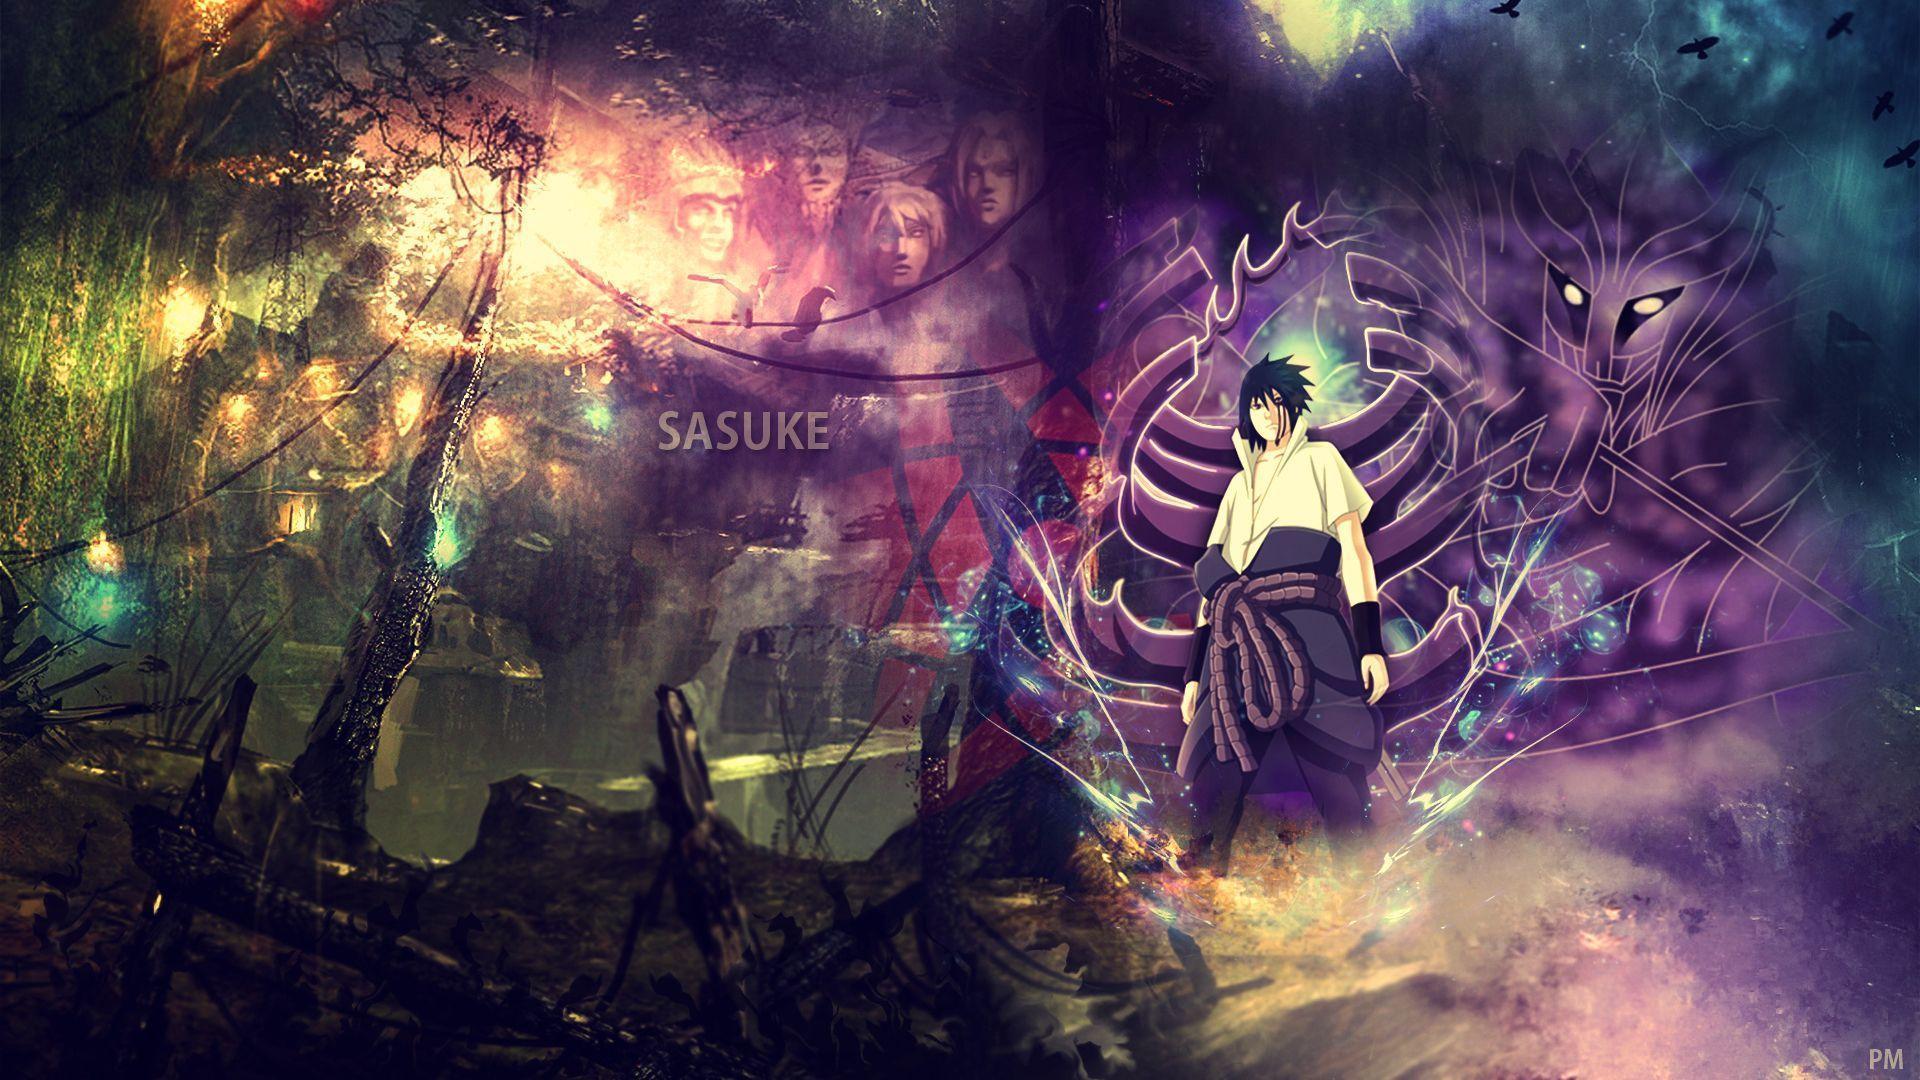 Sasuke Background High Quality. Wallpaper, Background, Image